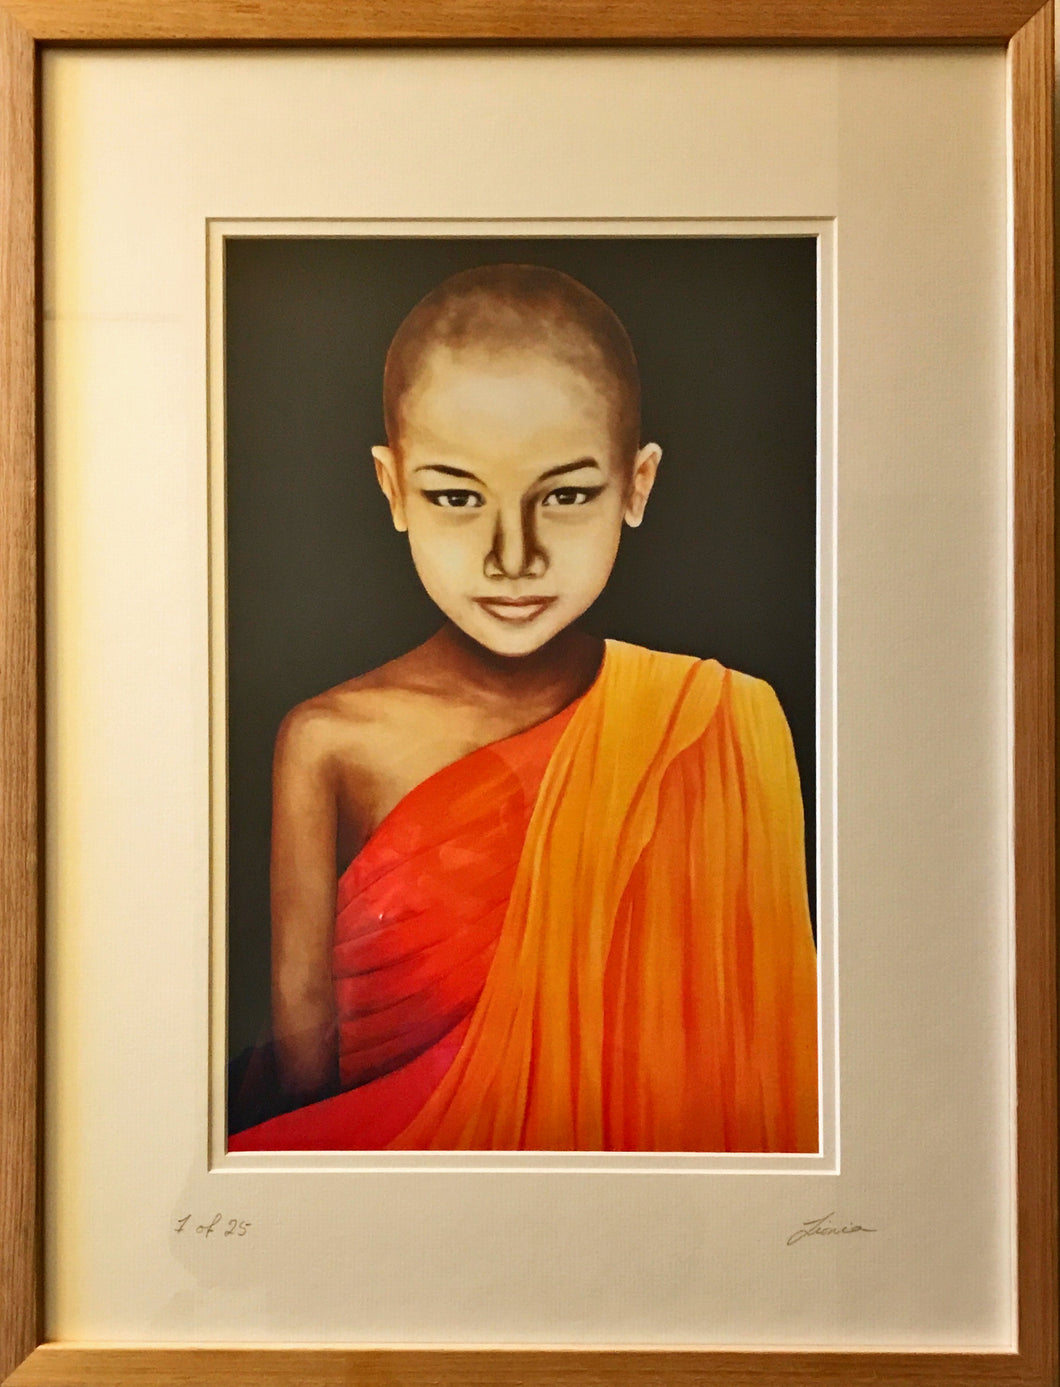 Enlightened Child - portrait of Buddhist boy. framed and unframed